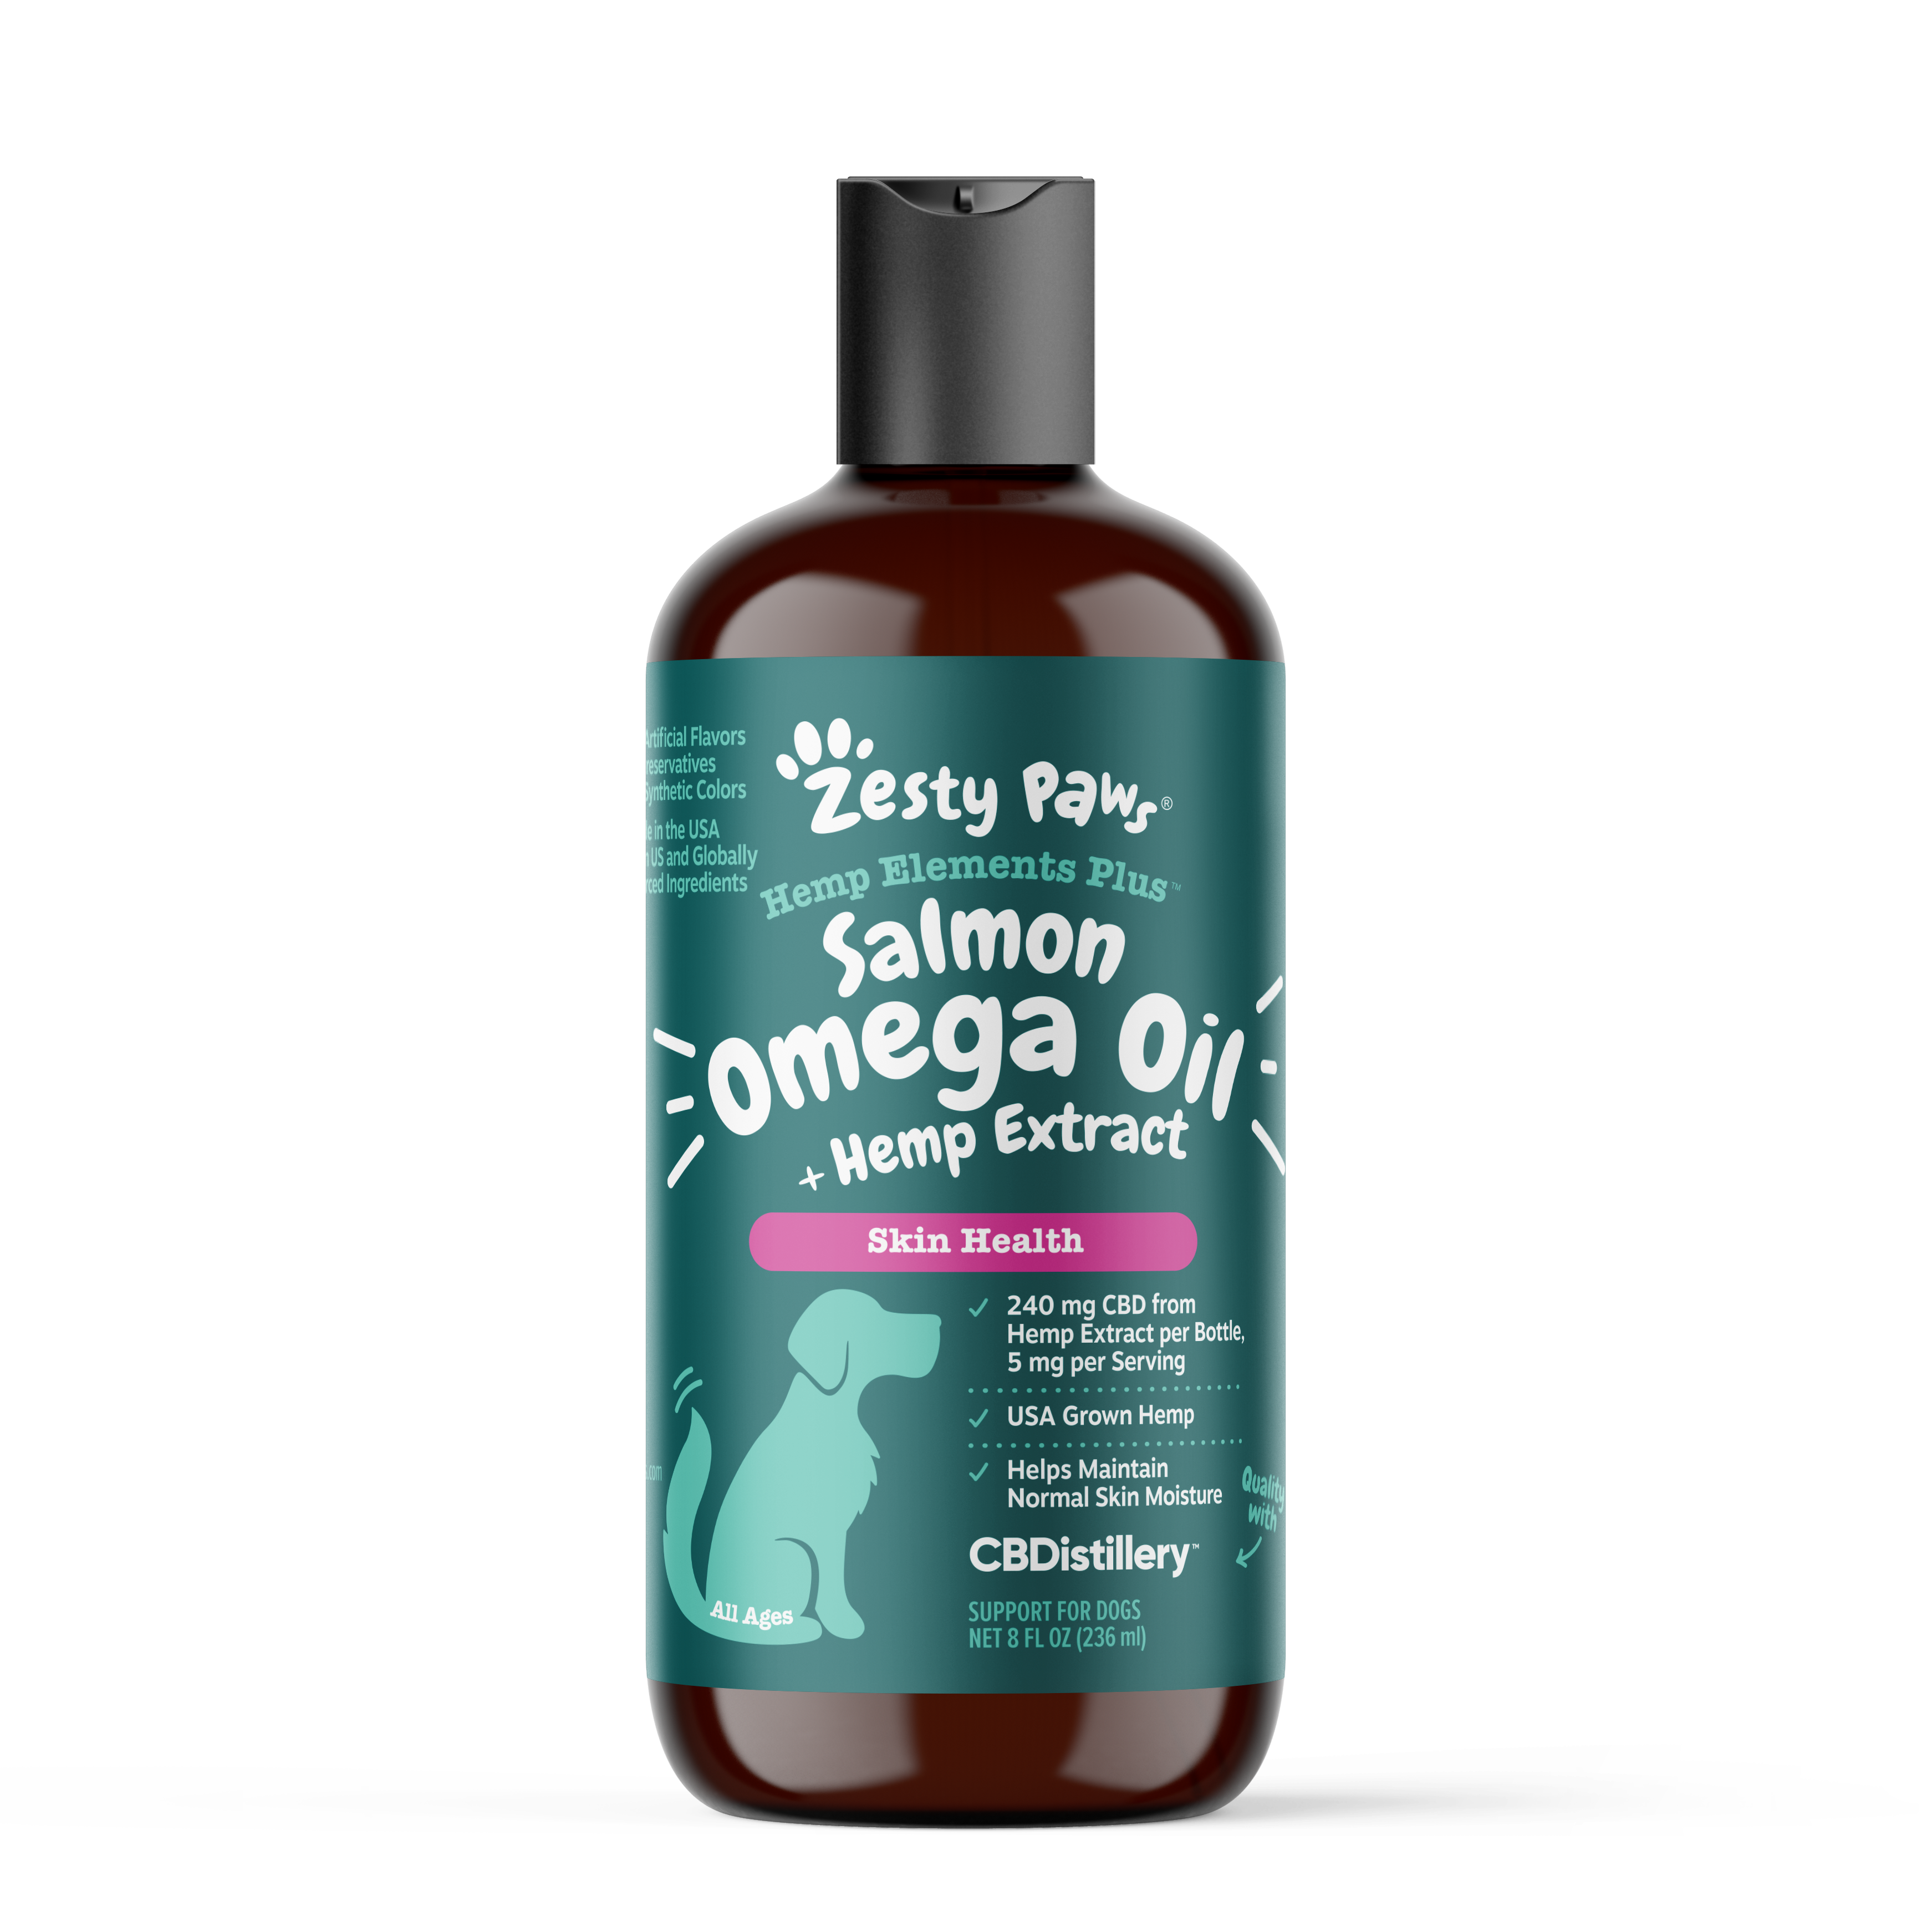 Hemp Elements Plus™ Salmon Omega Oil